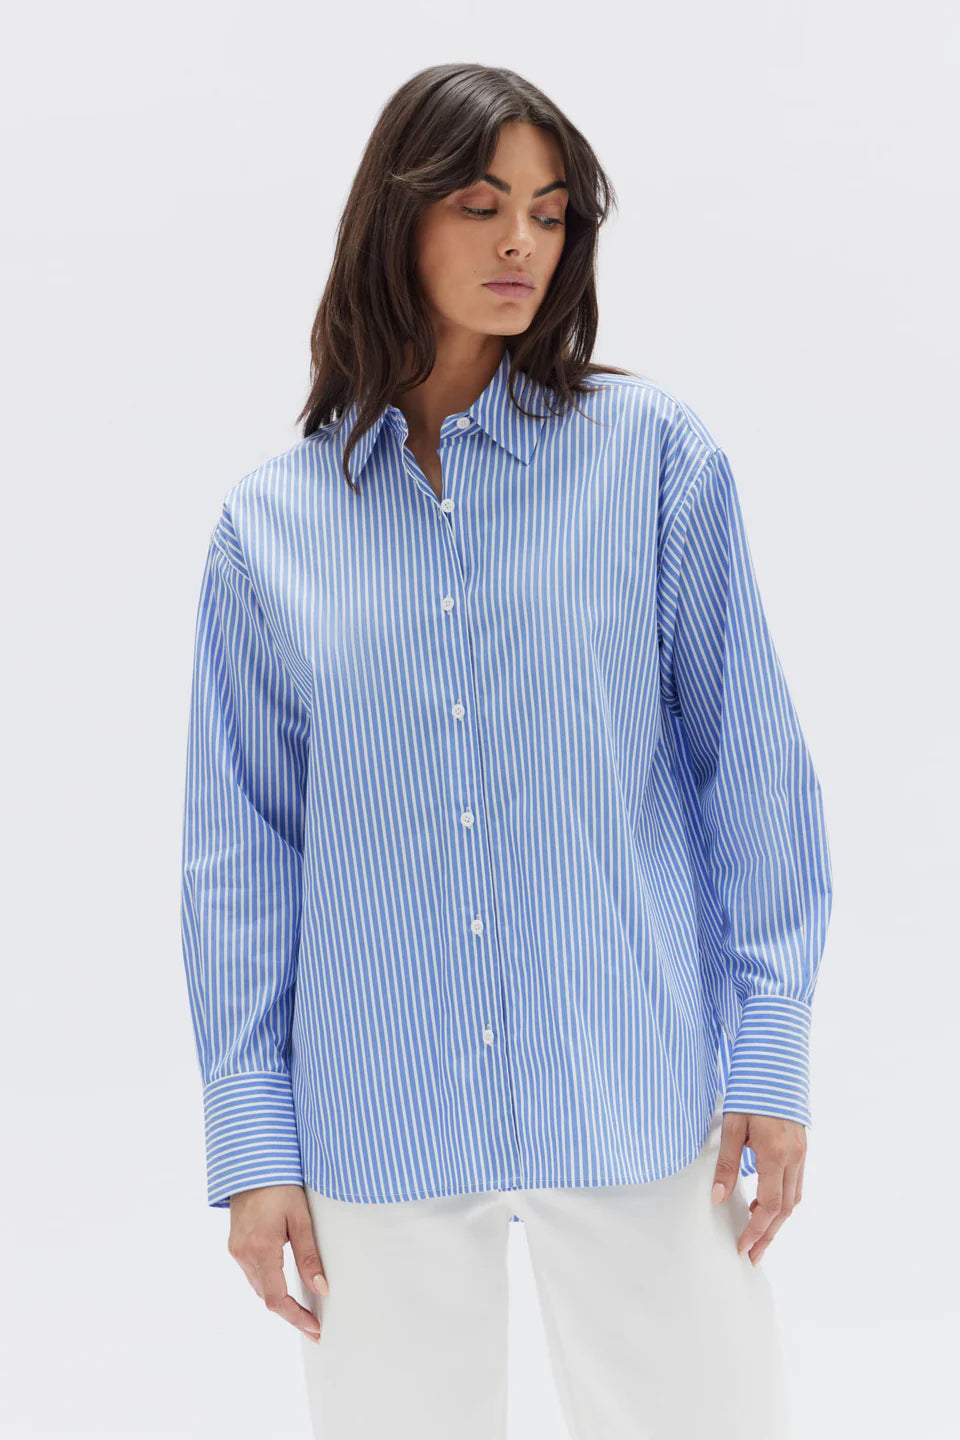 Assembly Label Signature Poplin Shirt - Blue/White Stripe